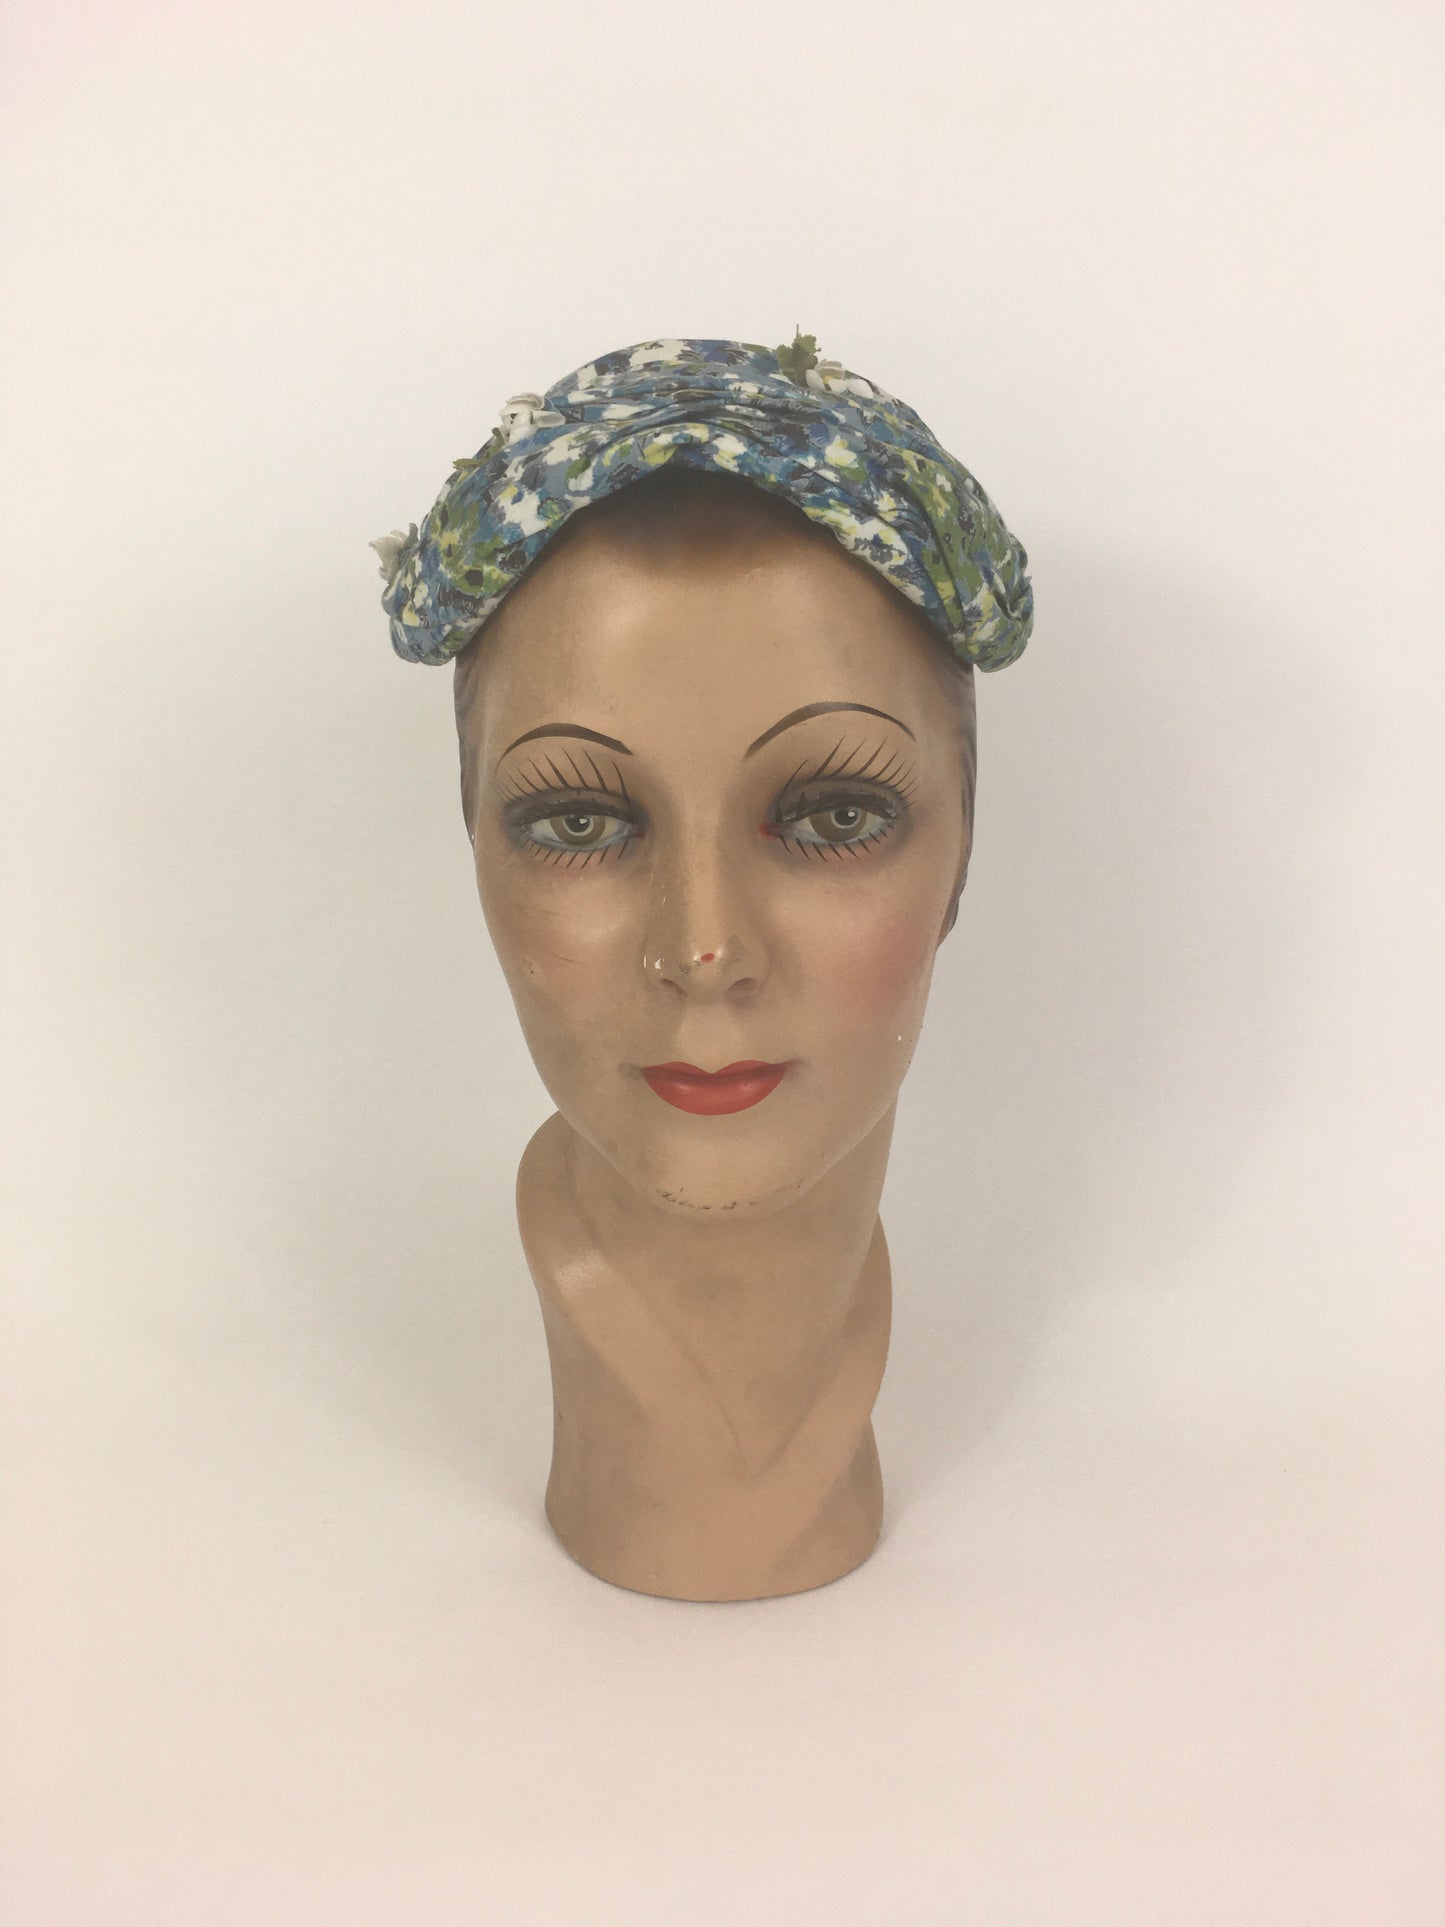 Original 1950’s Darling Floral Headpiece With Flora & Velvet Trim - In Blues, Greens & Ivory